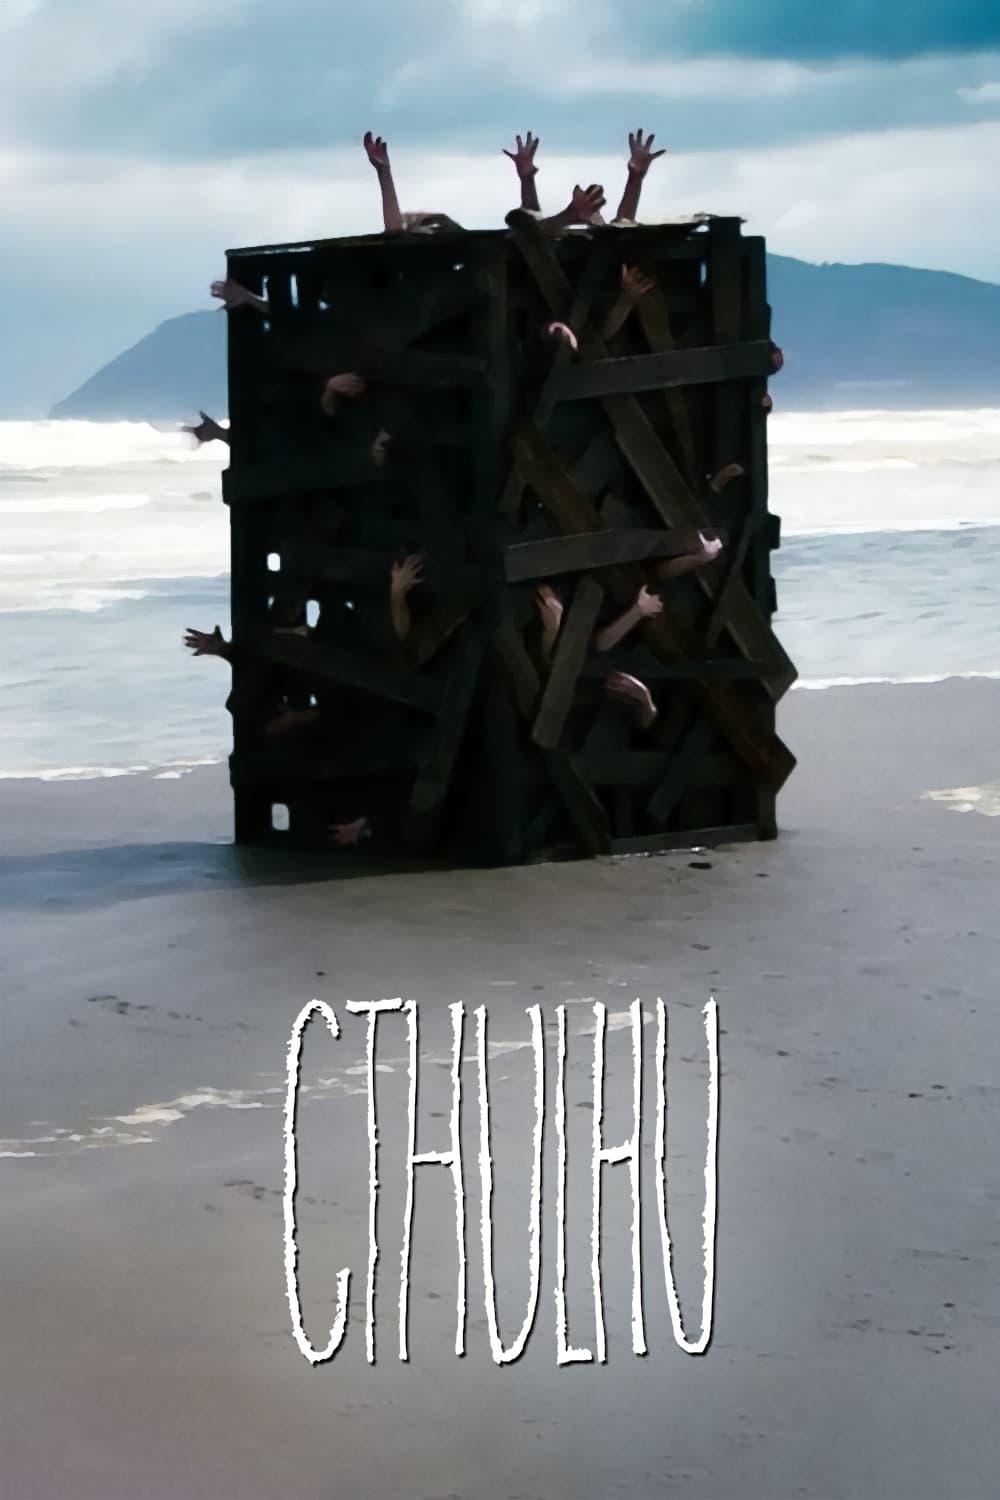 Cthulhu poster